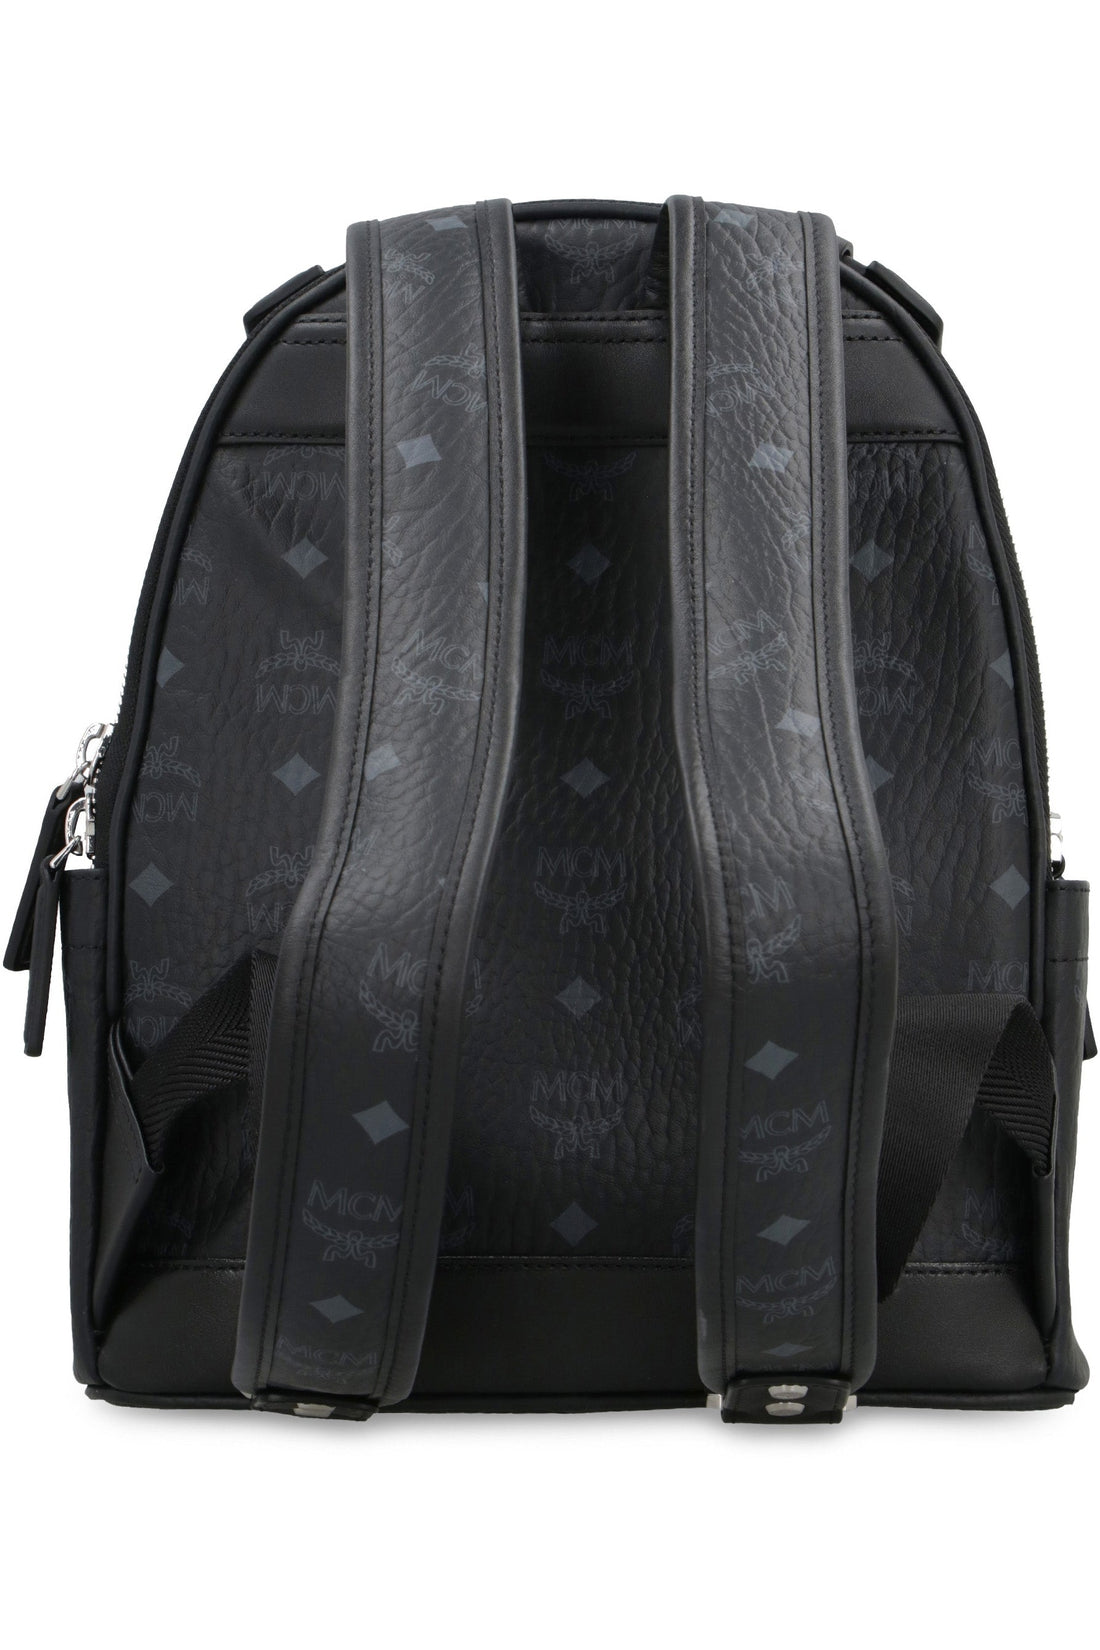 MCM-OUTLET-SALE-Stark canvas backpack-ARCHIVIST